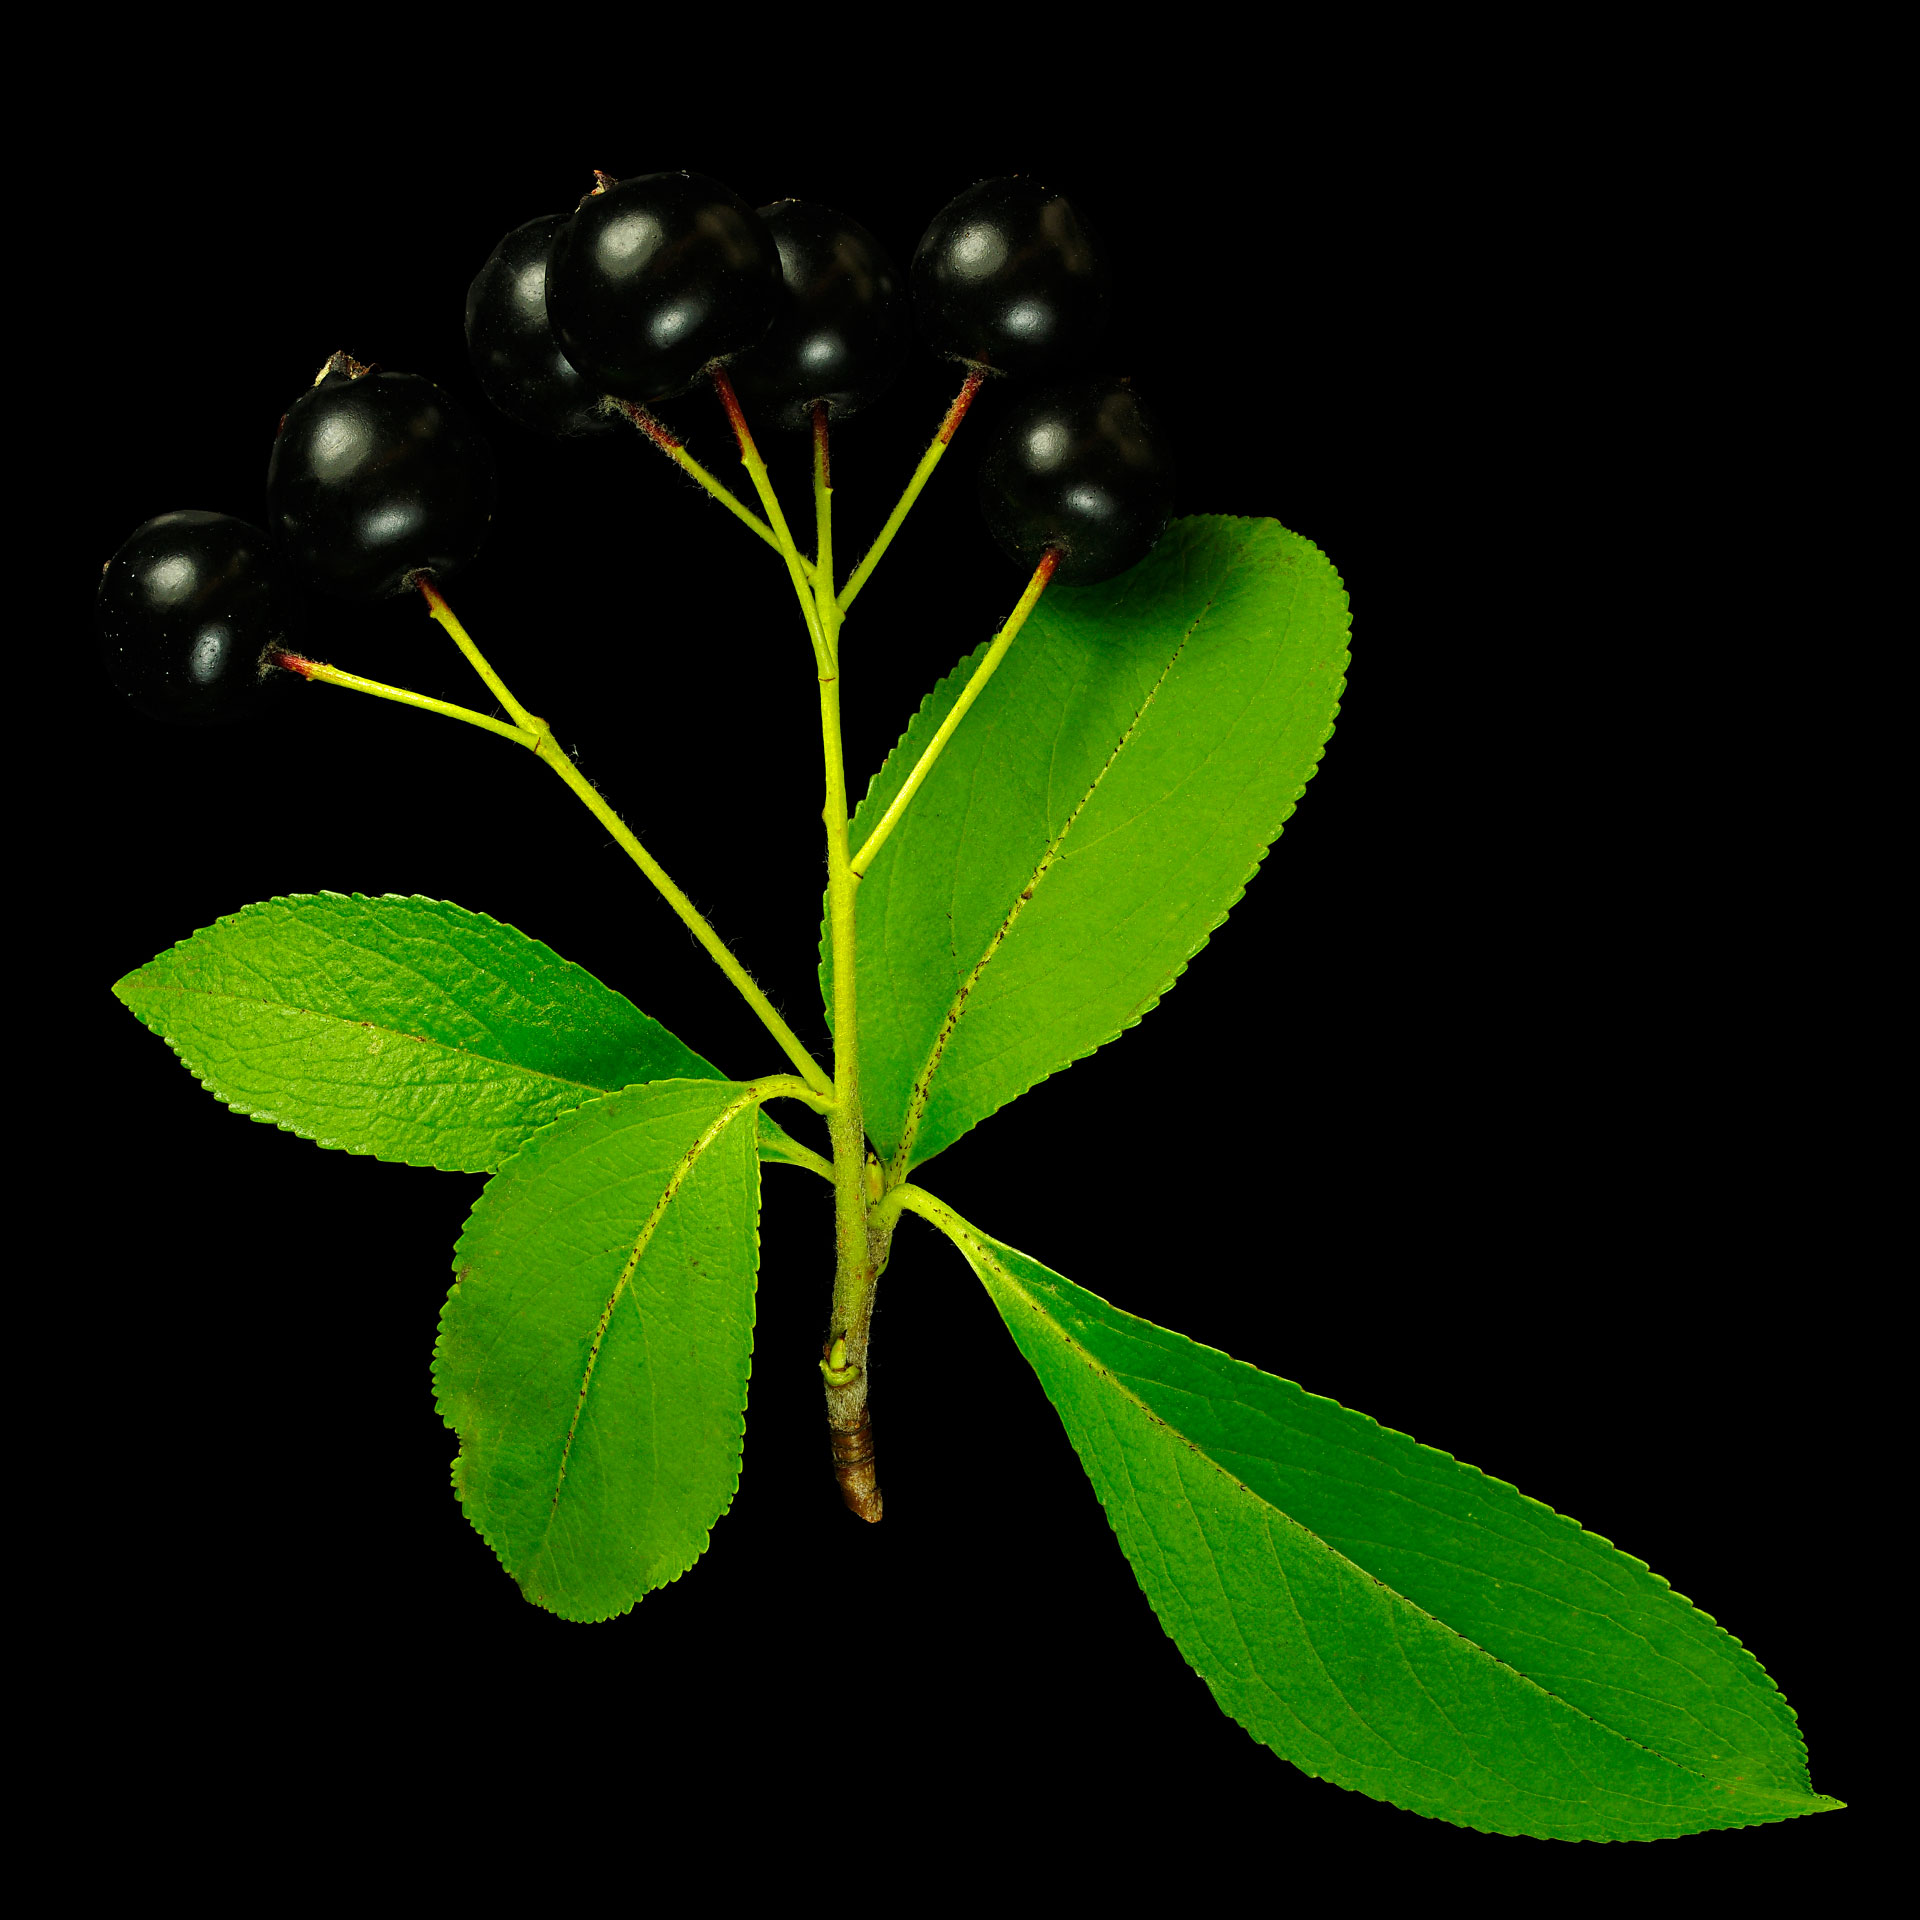 Black chokeberry: Aronia melanocarpa